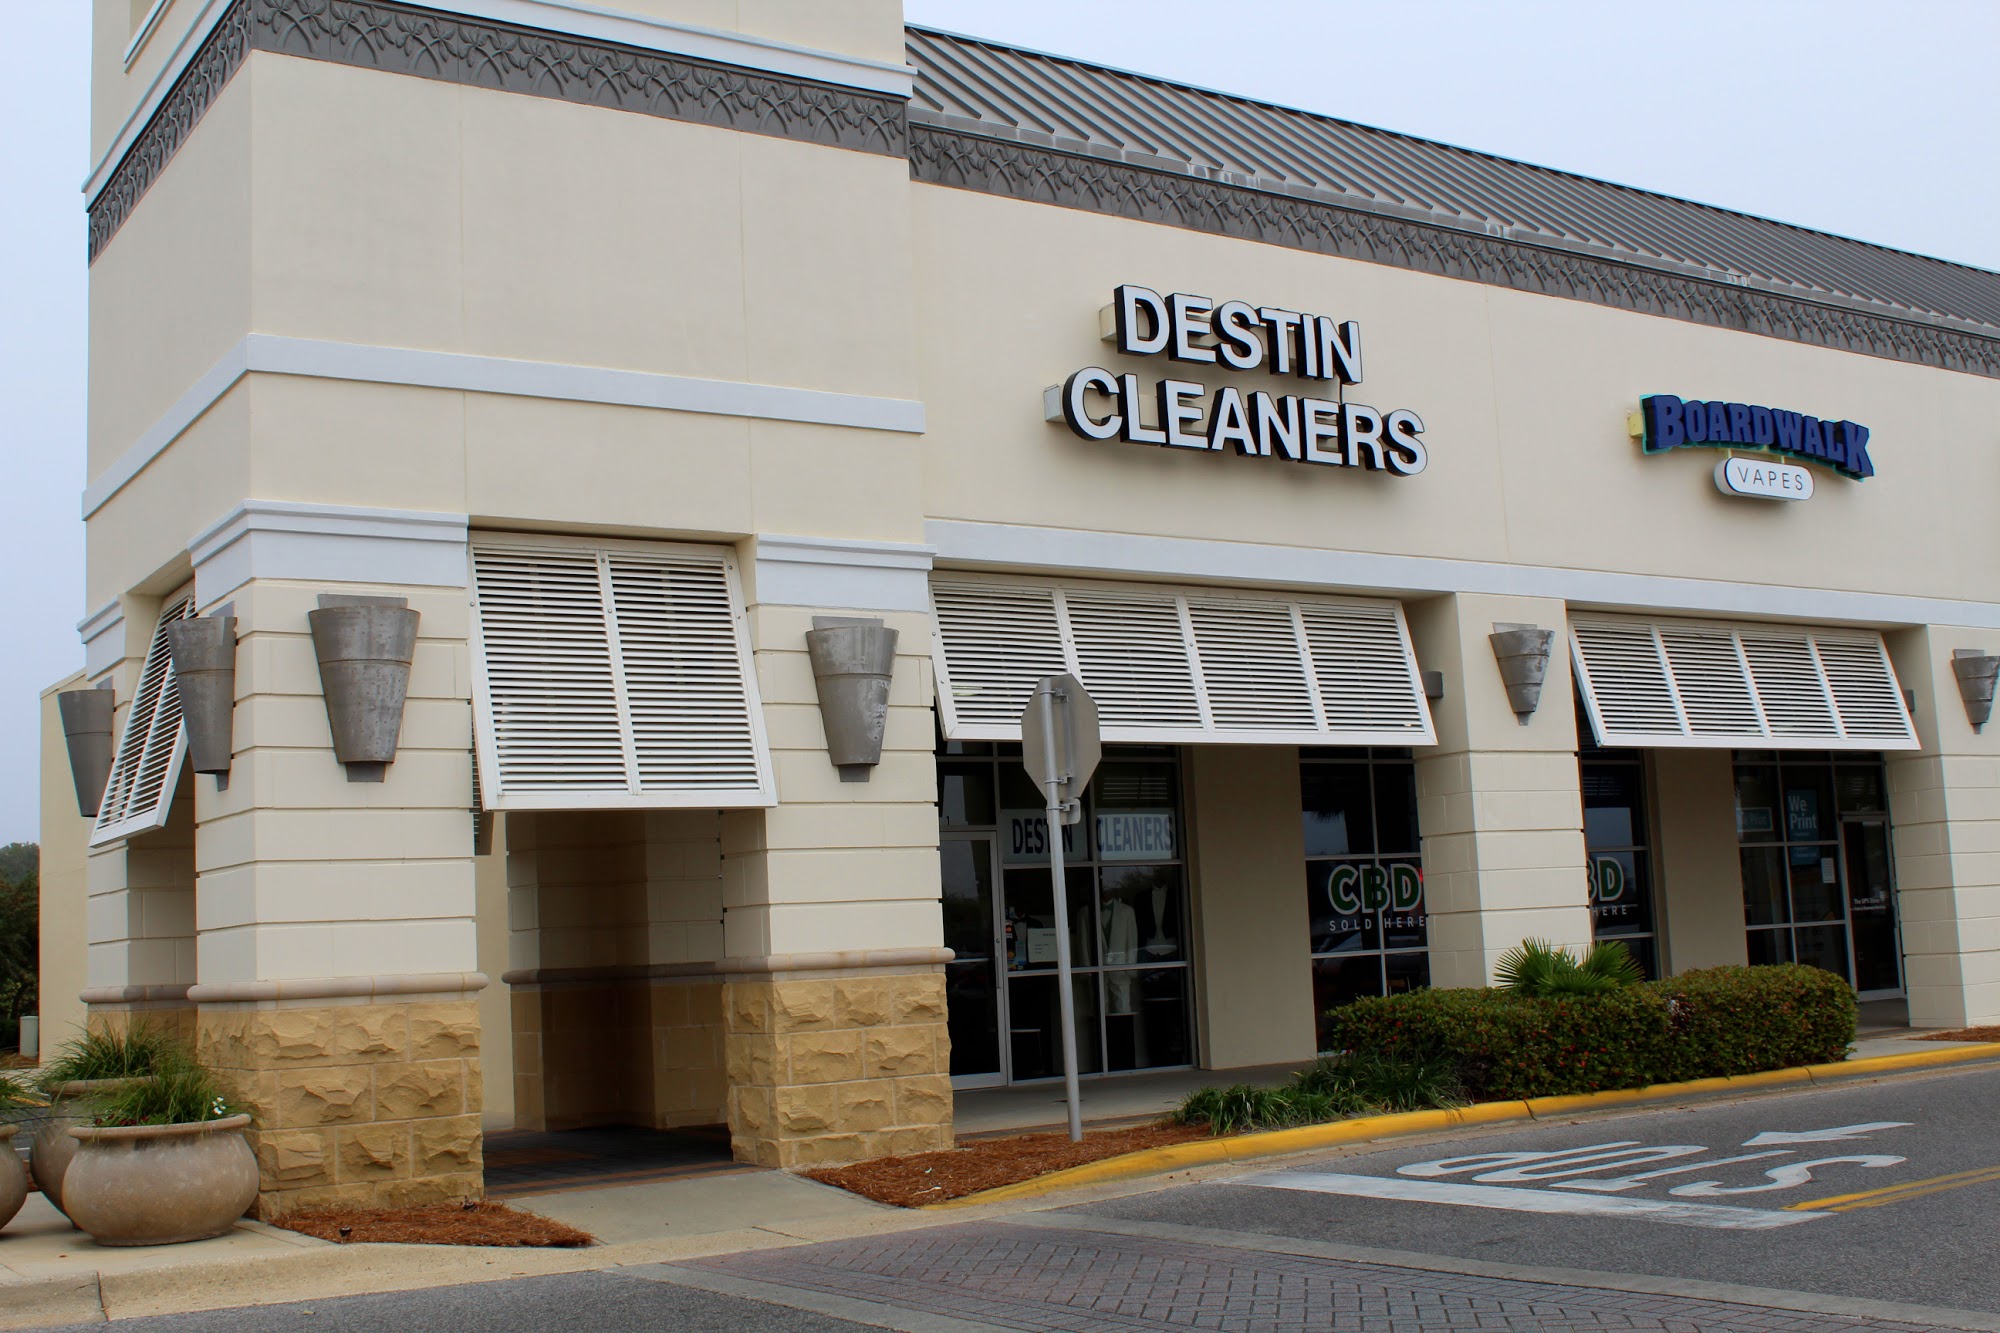 Destin Cleaners